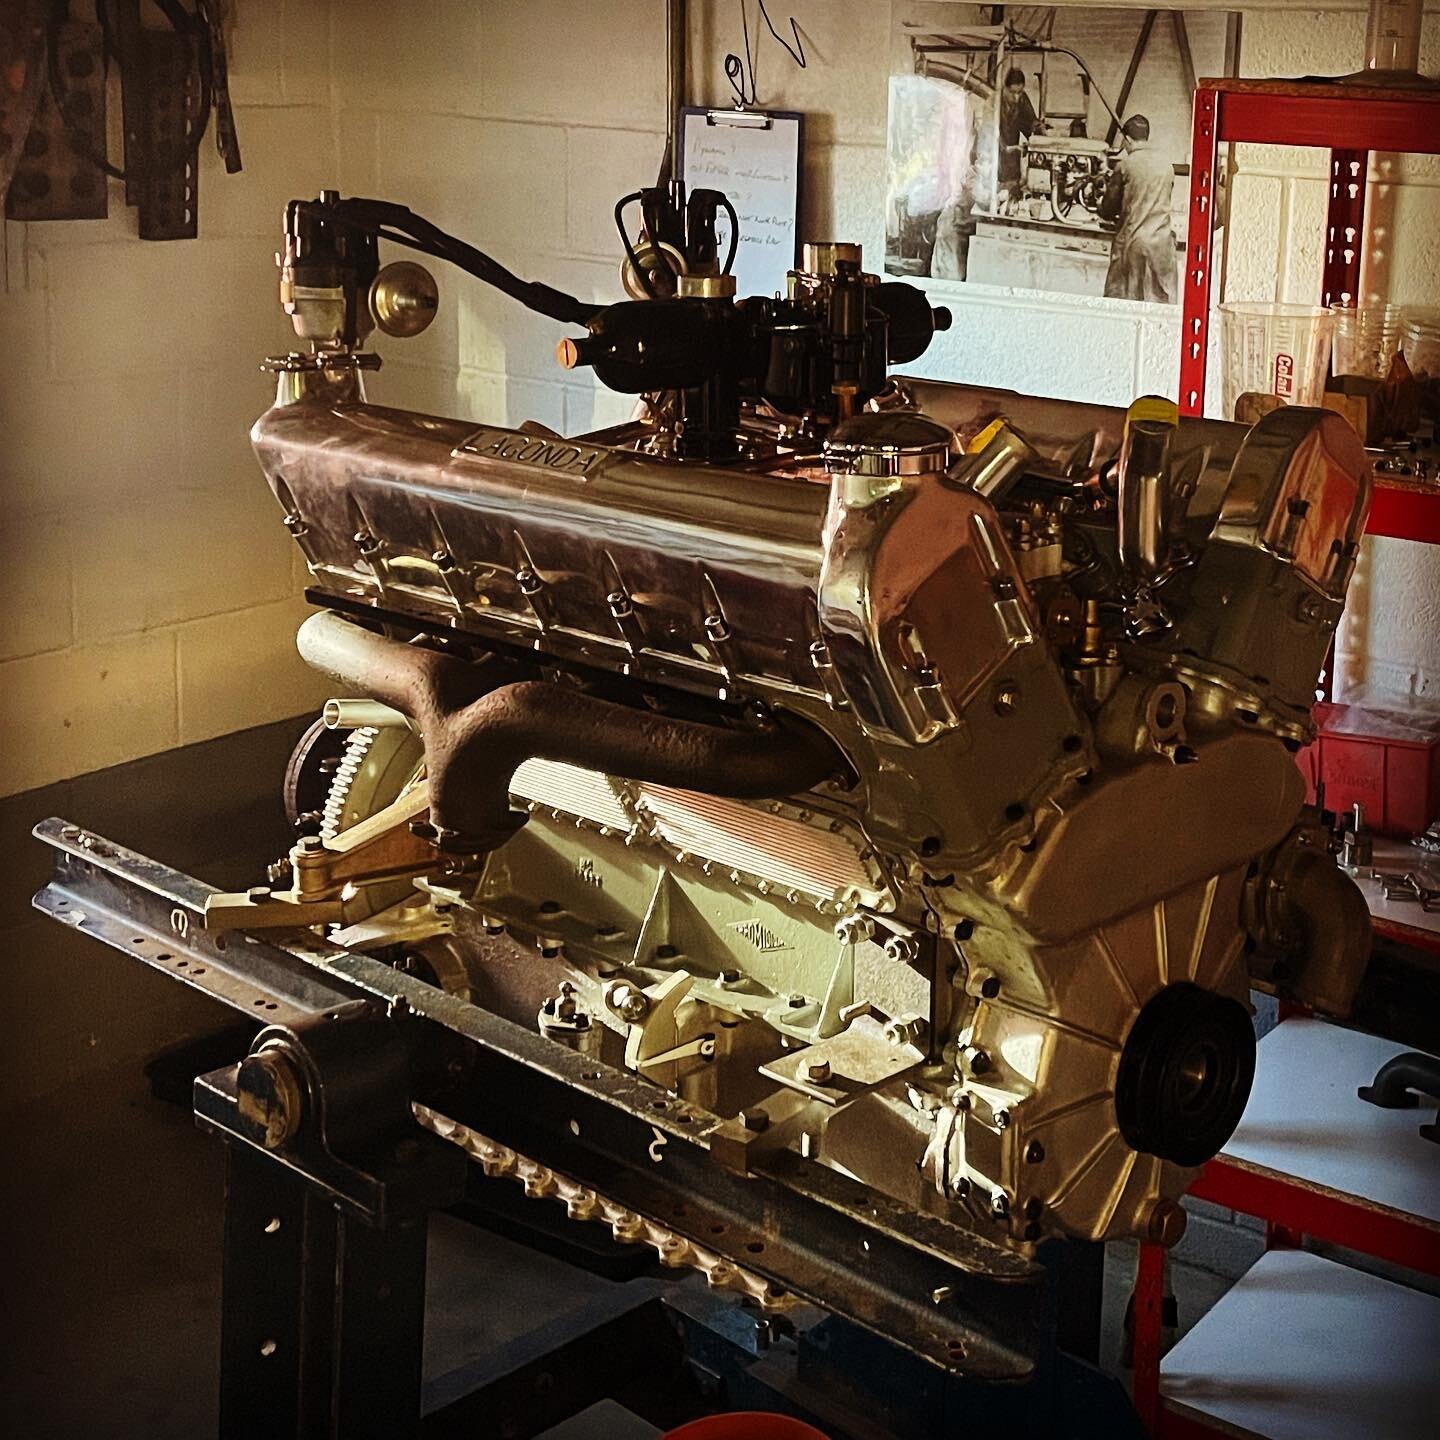 Final assembly of the 1939 Lagonda V12 engine. Rebuilt in house by the @akvr_uk team. Looking forward to initial runs on the dyno. #lagonda #v12 #restoration #concours #vscc #vintagecar #vintagecarsofinstagram #engine #vintageengine #enginerebuild #e